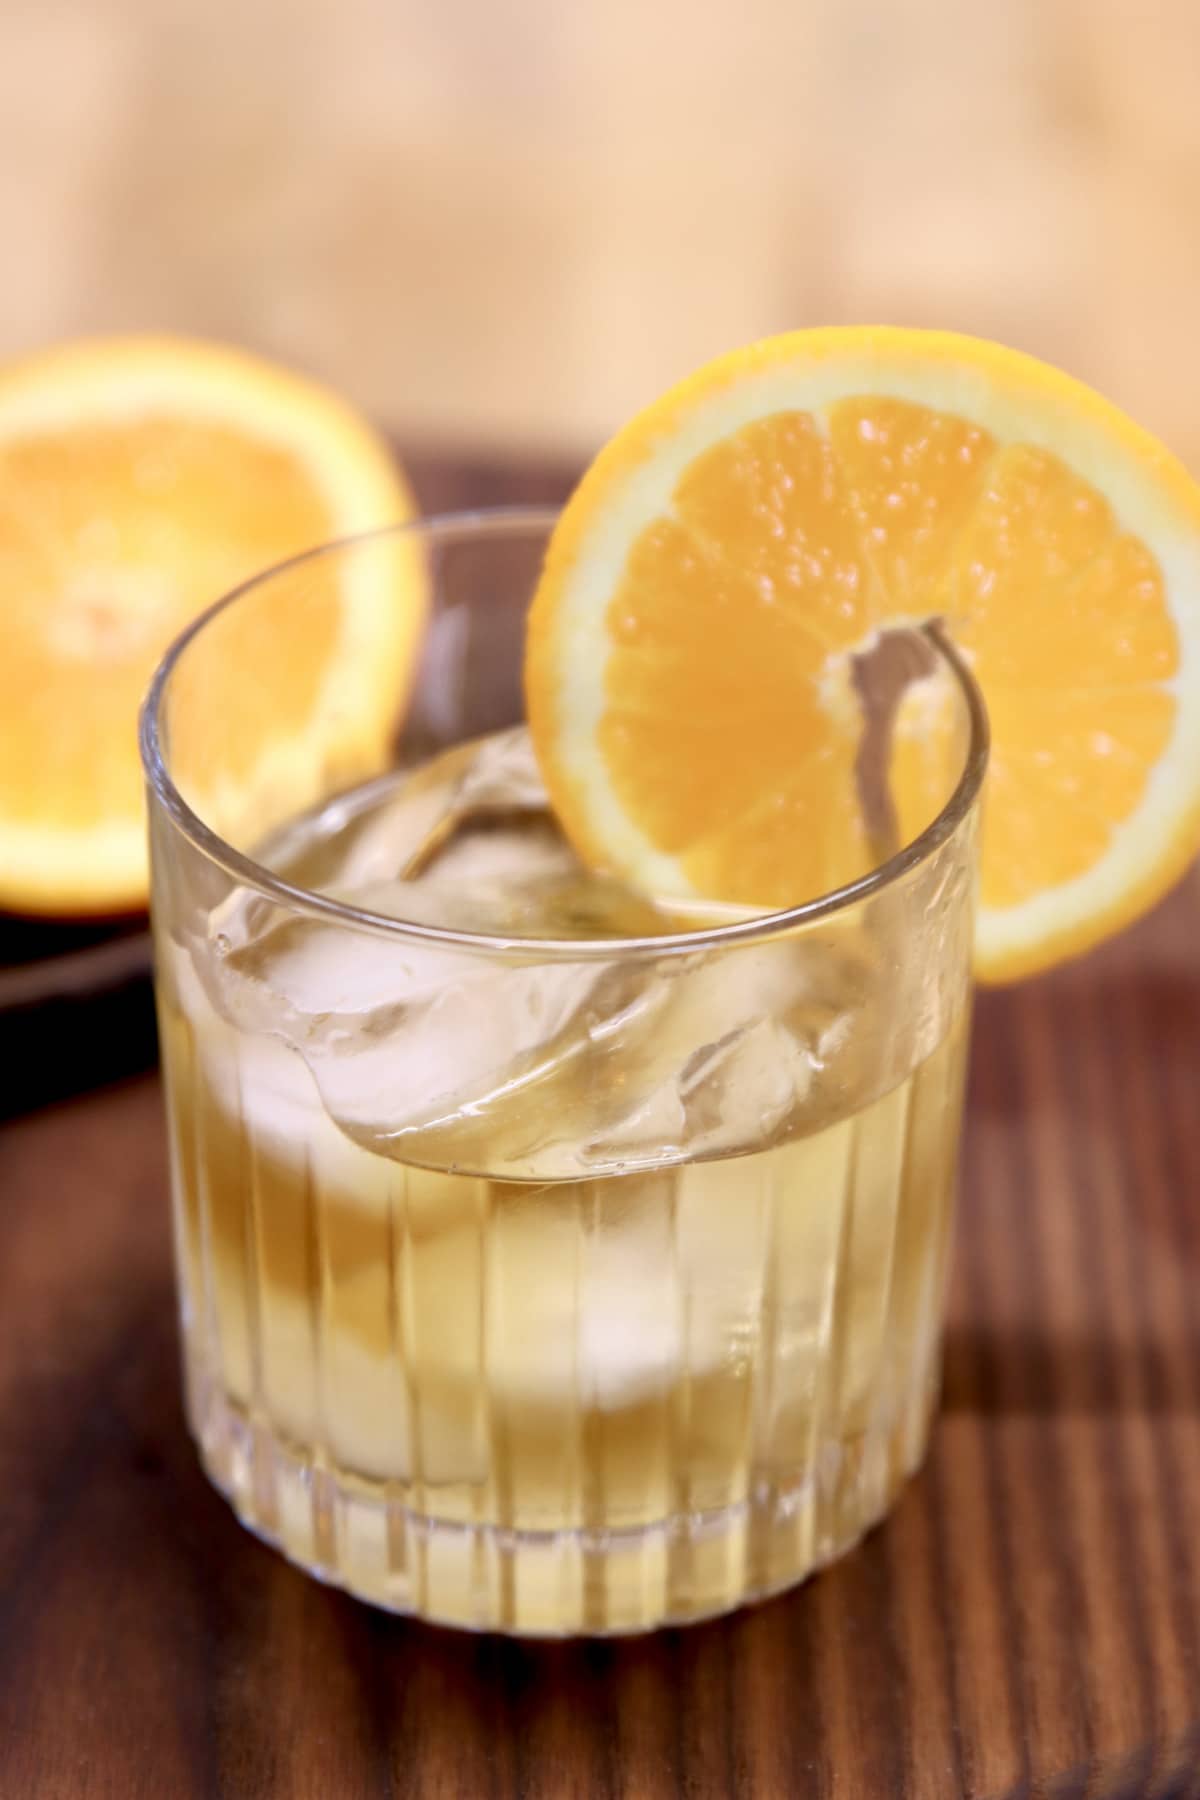 Whiskey cocktail with orange wheel garnish.